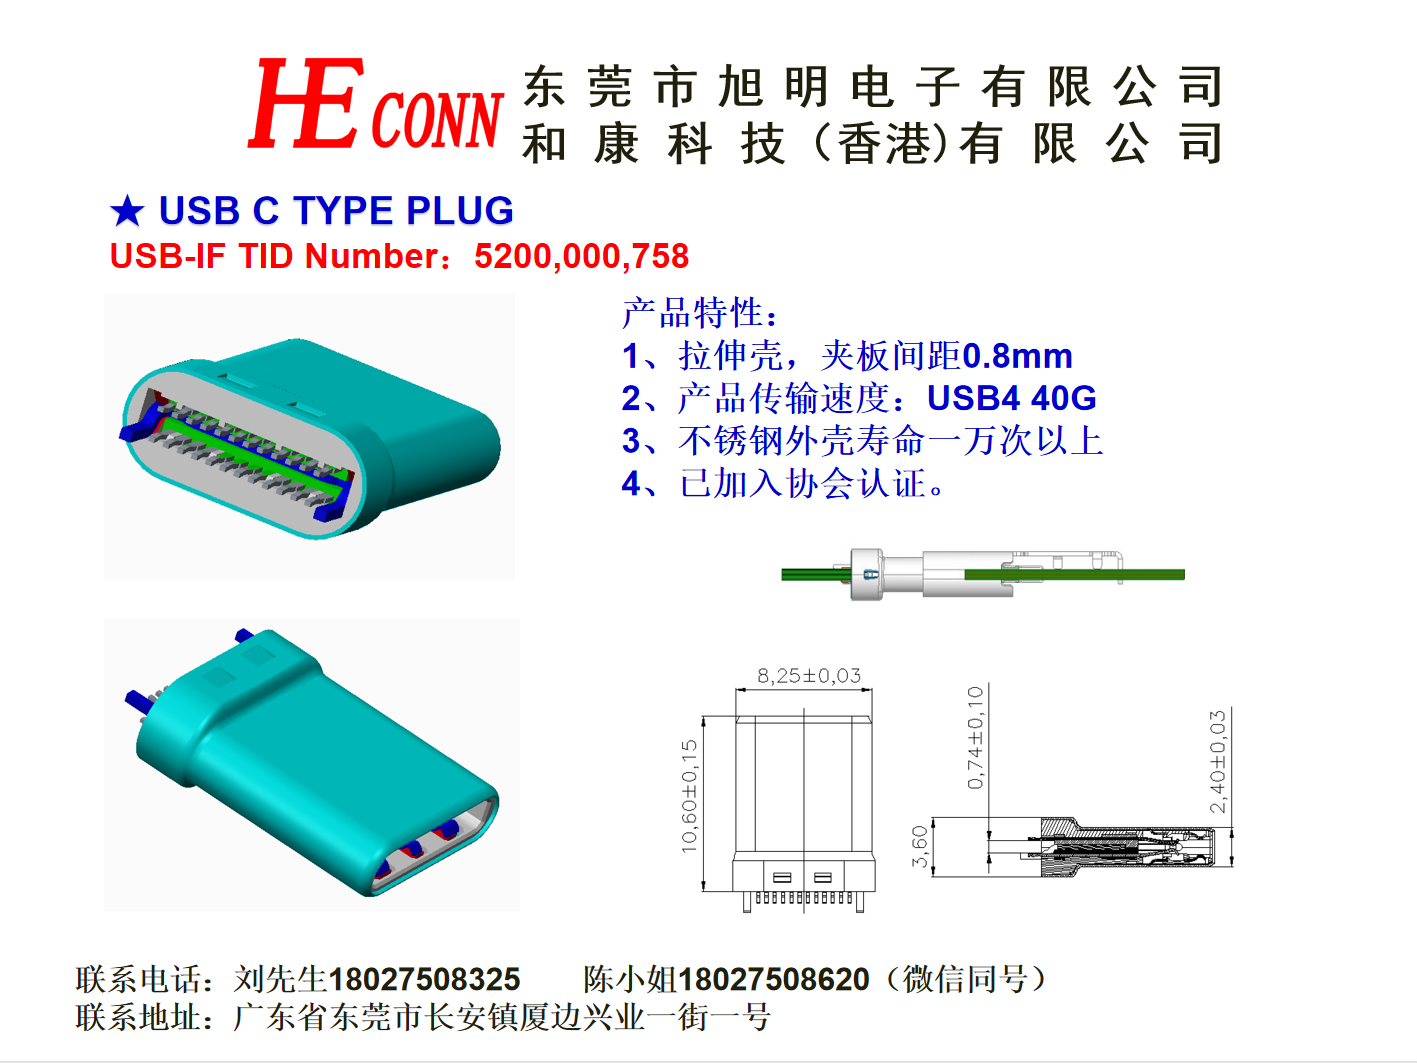 USB TYPE C PLUG